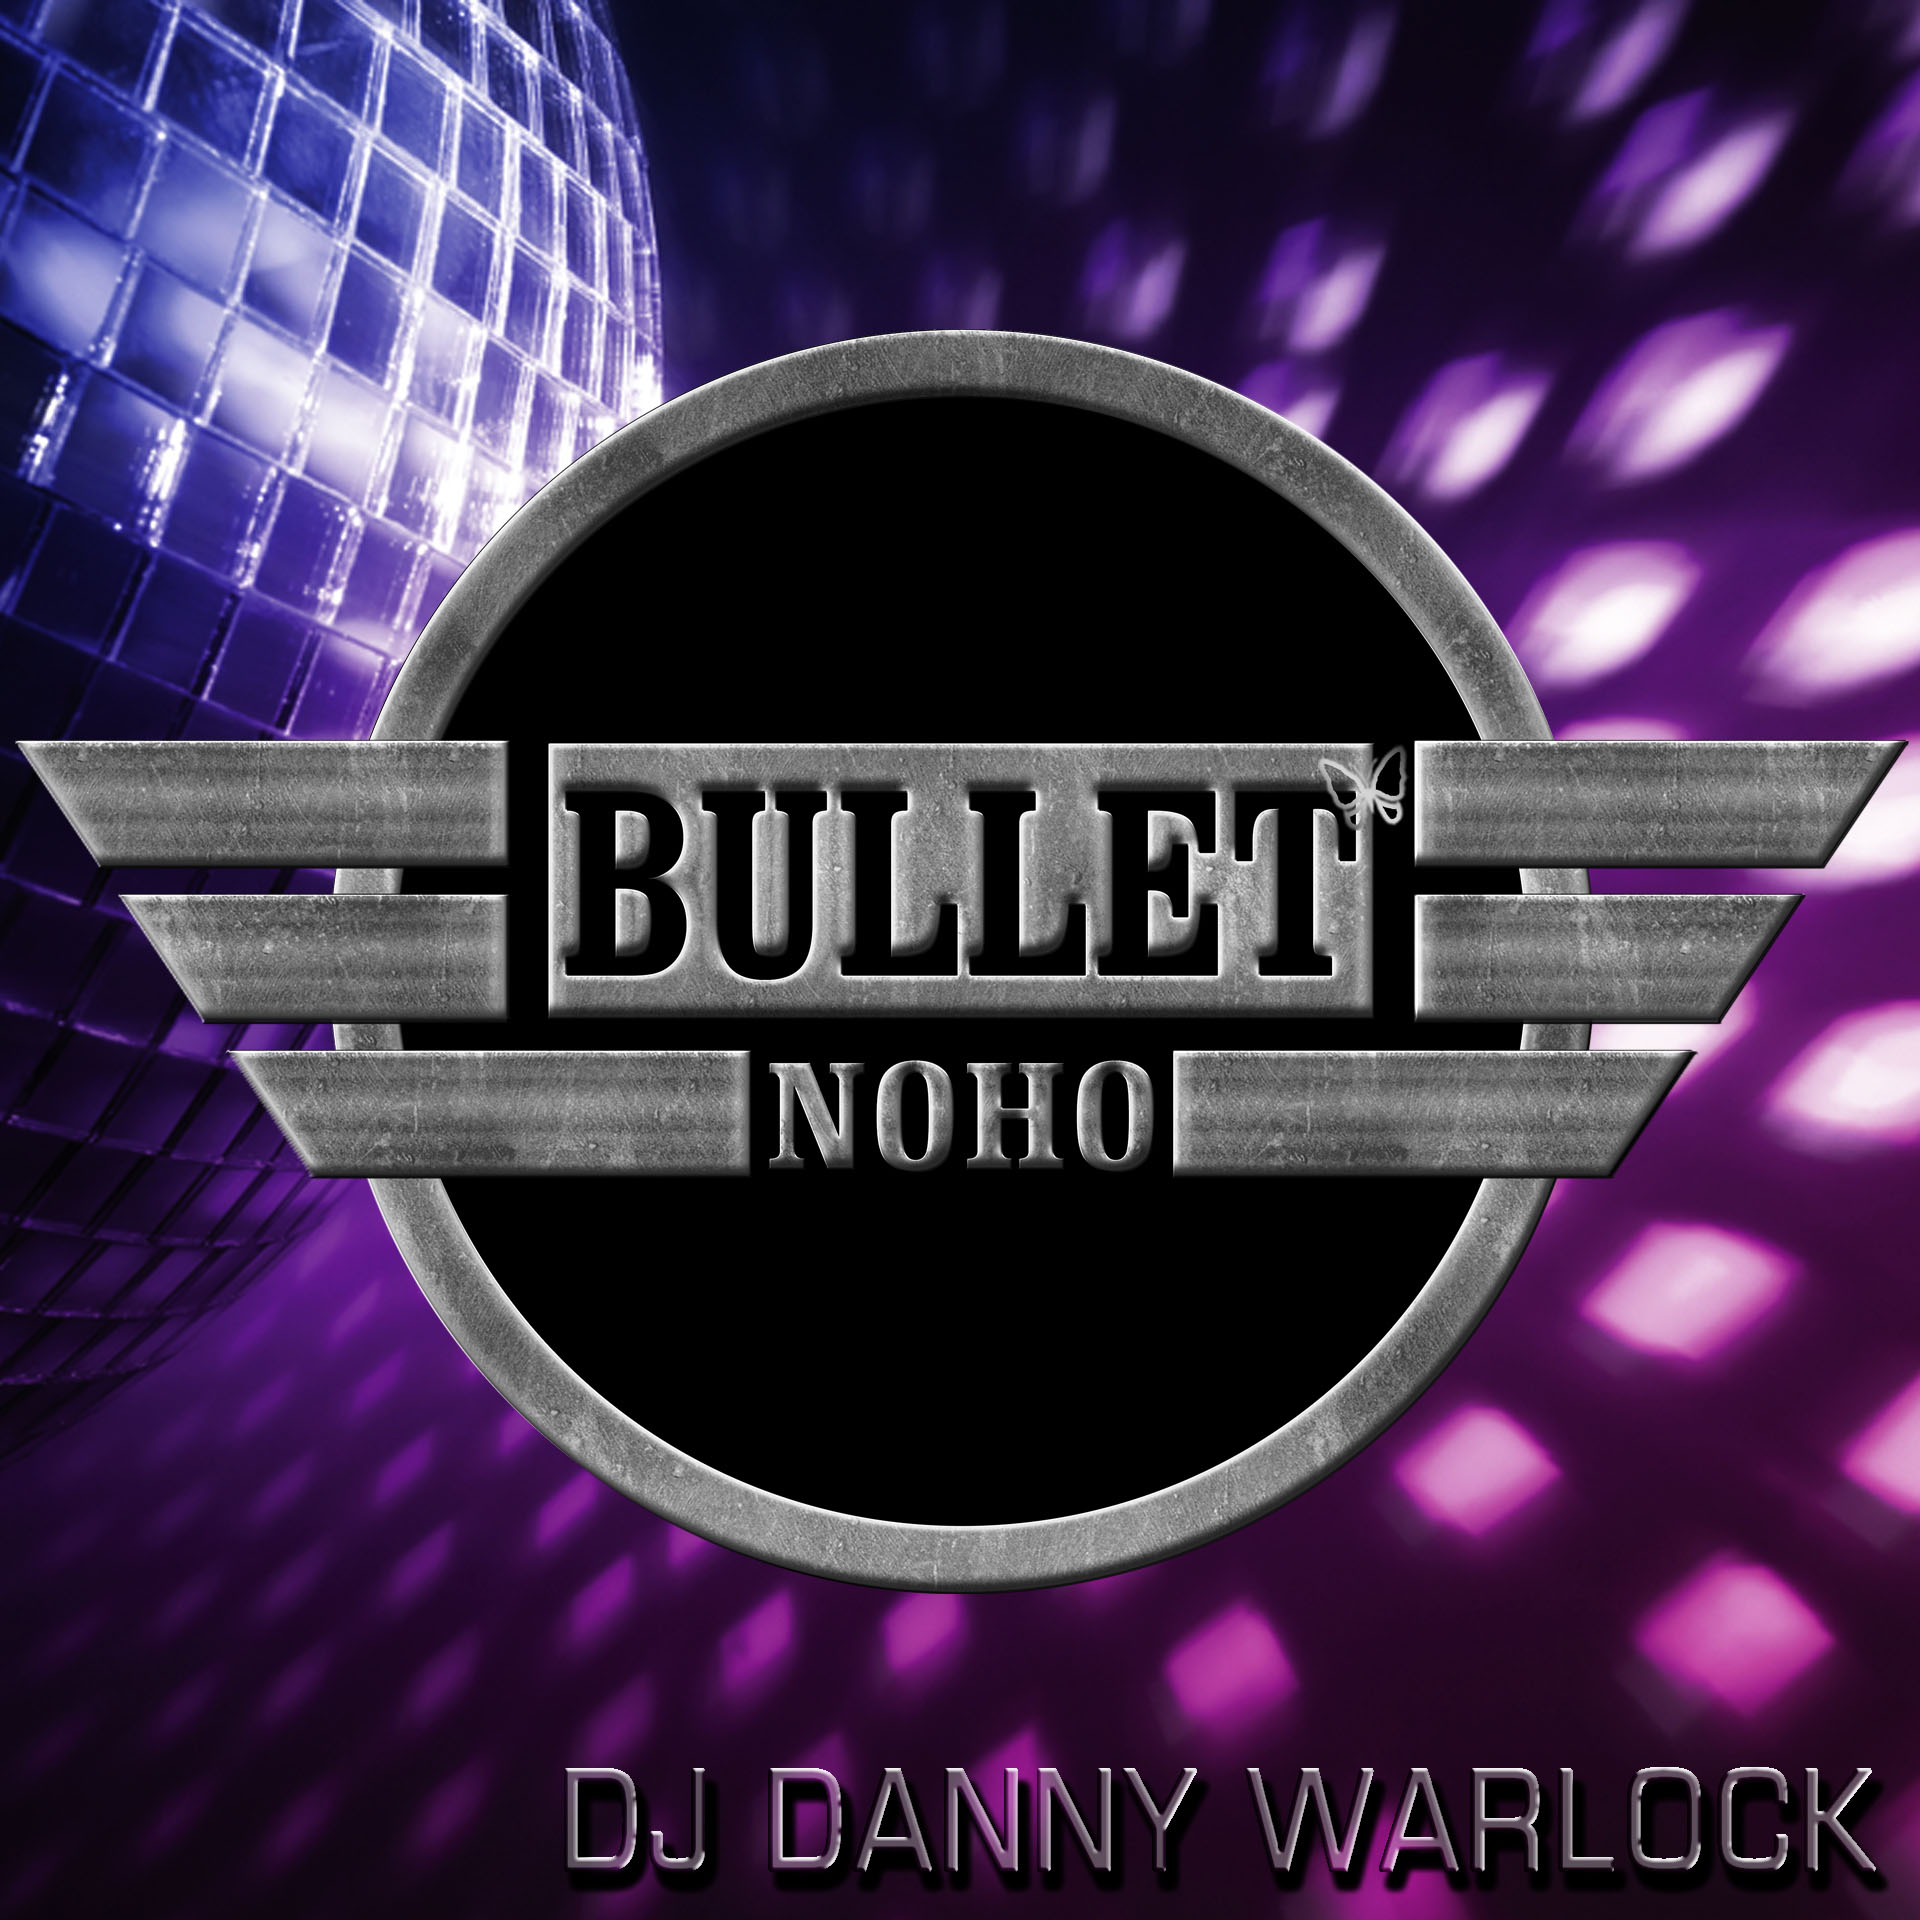 DJ DANNY WARLOCK: Saturday, May 21, 2022 from 8:00 PM to 2:00 AM